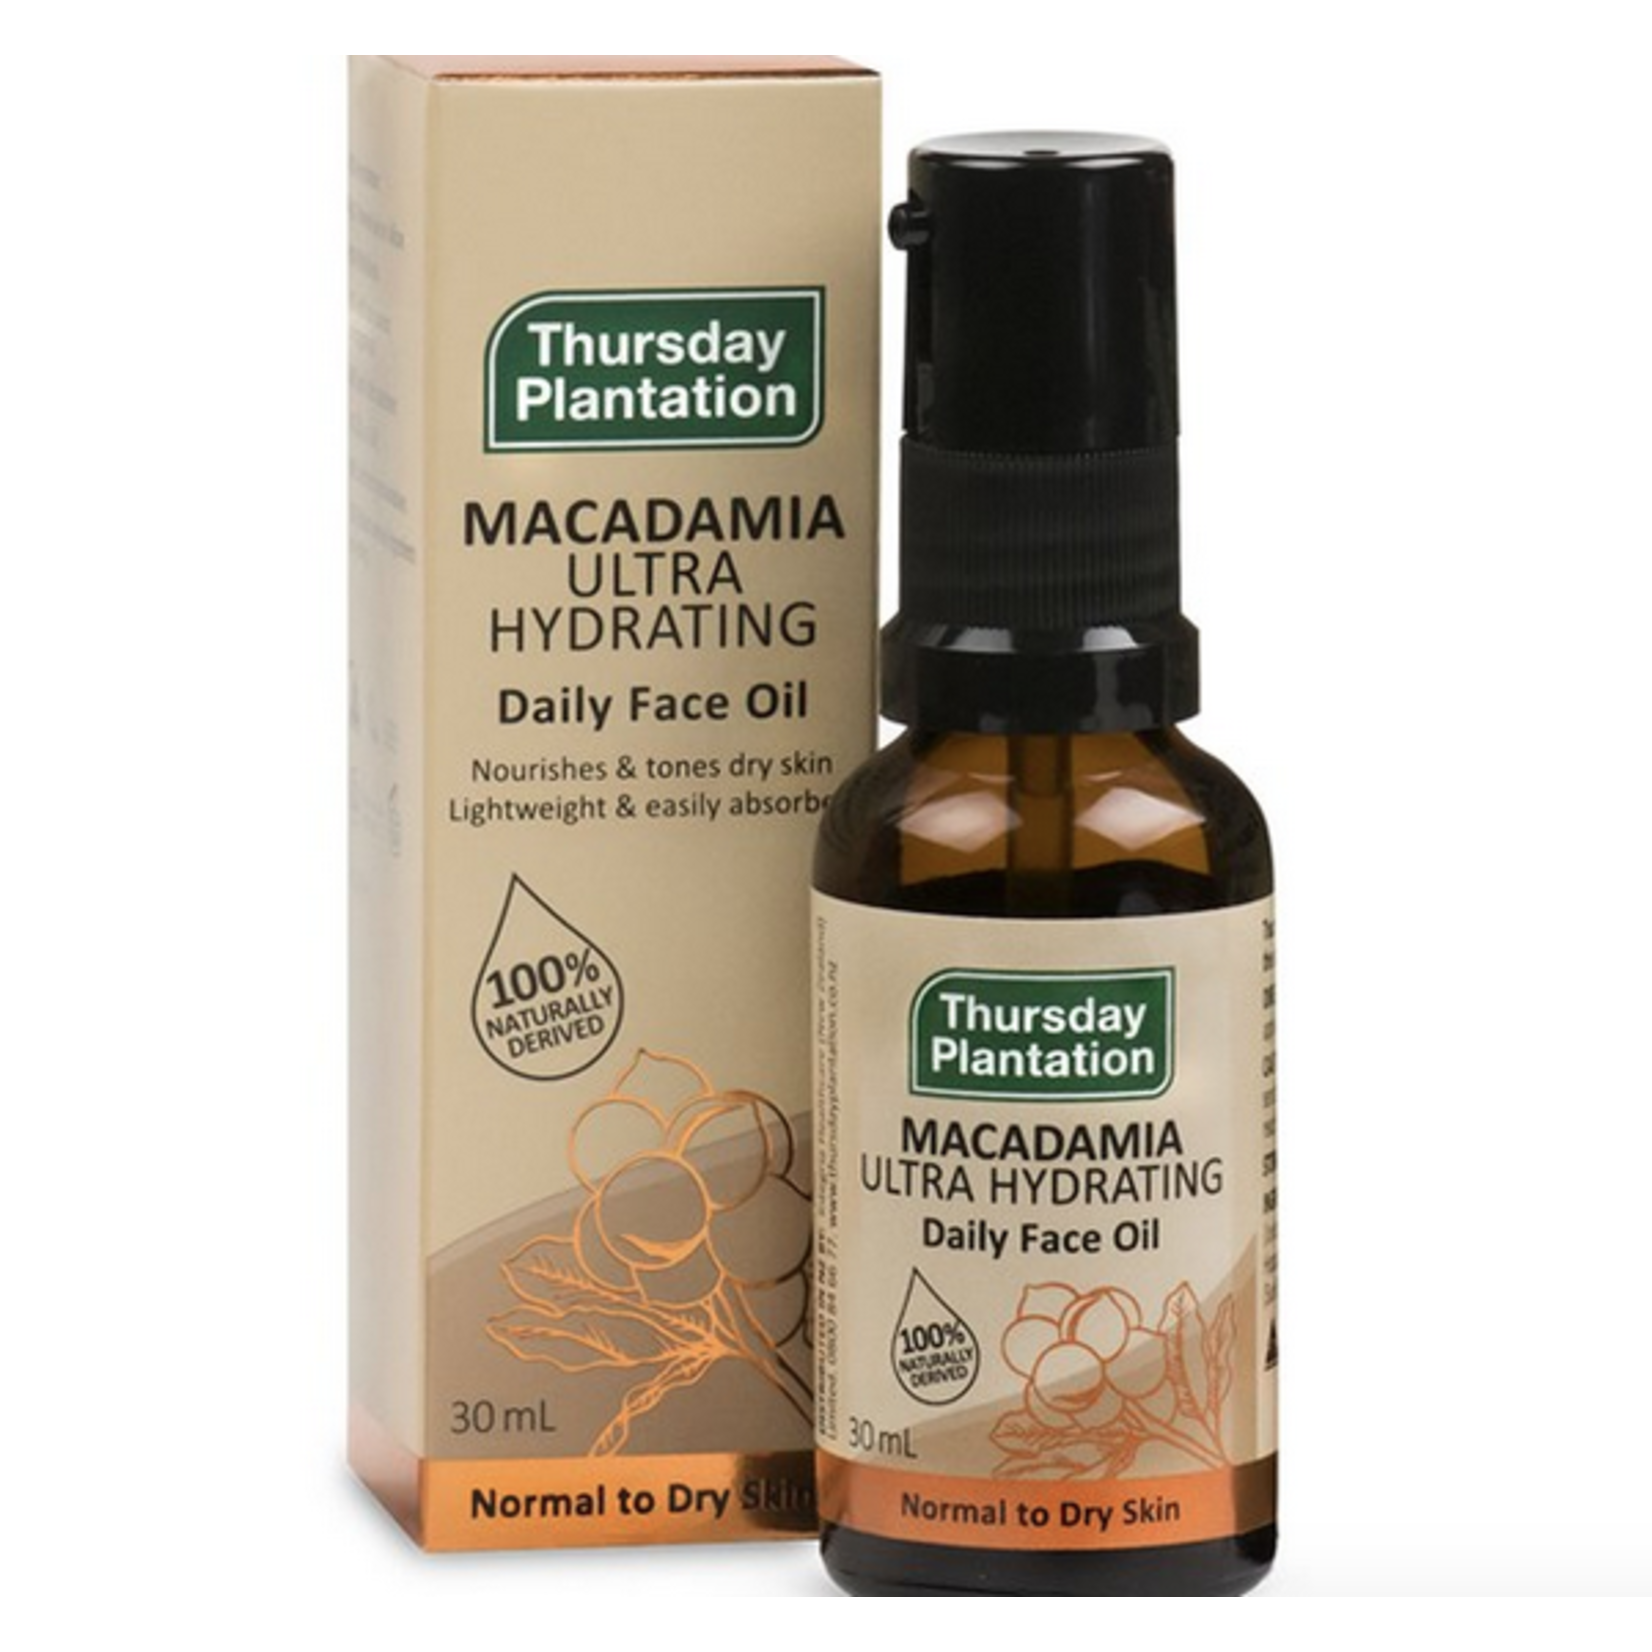 Thursday plantation Thursday Plantation Macadamia Ultra Hydrating Daily Face Oil 30 ml